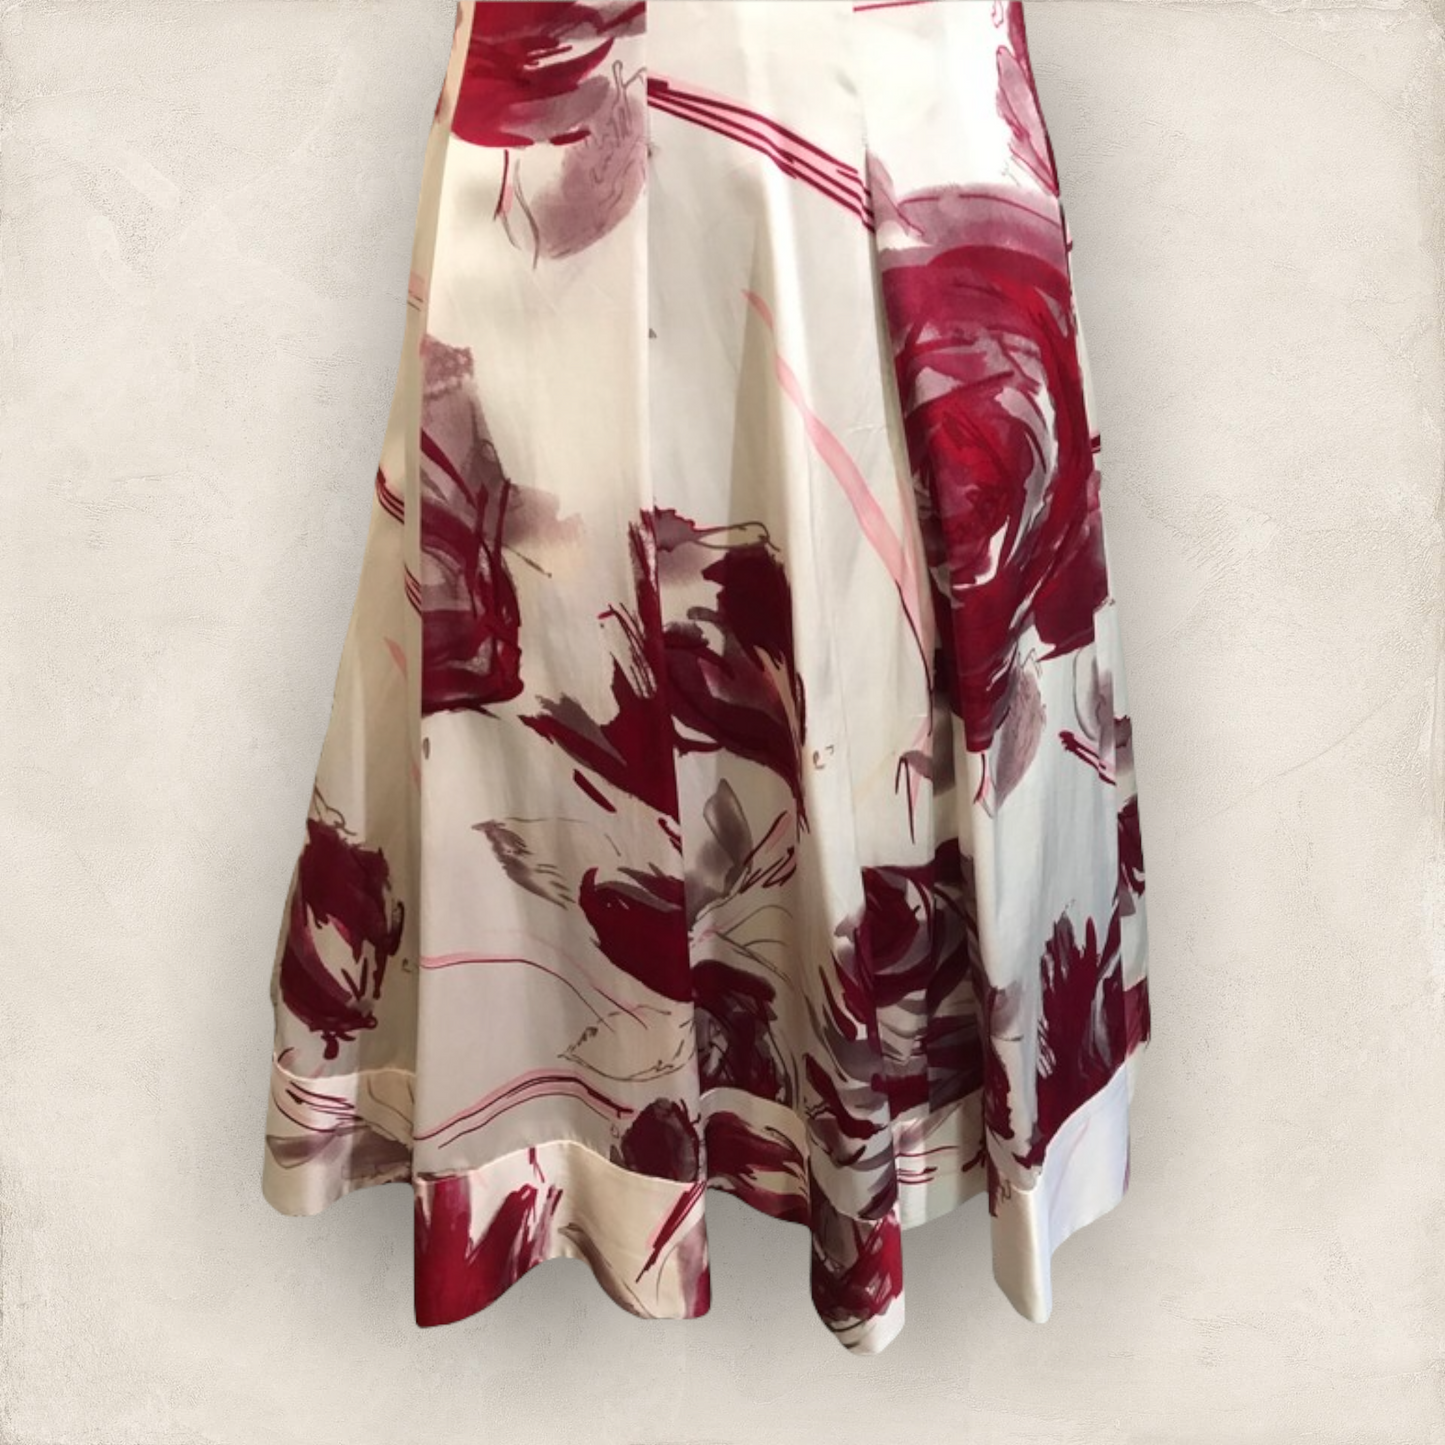 Coast Ivory Red Floral Silk Cotton Mix Dress UK 10 US 8 EU 38 Timeless Fashions